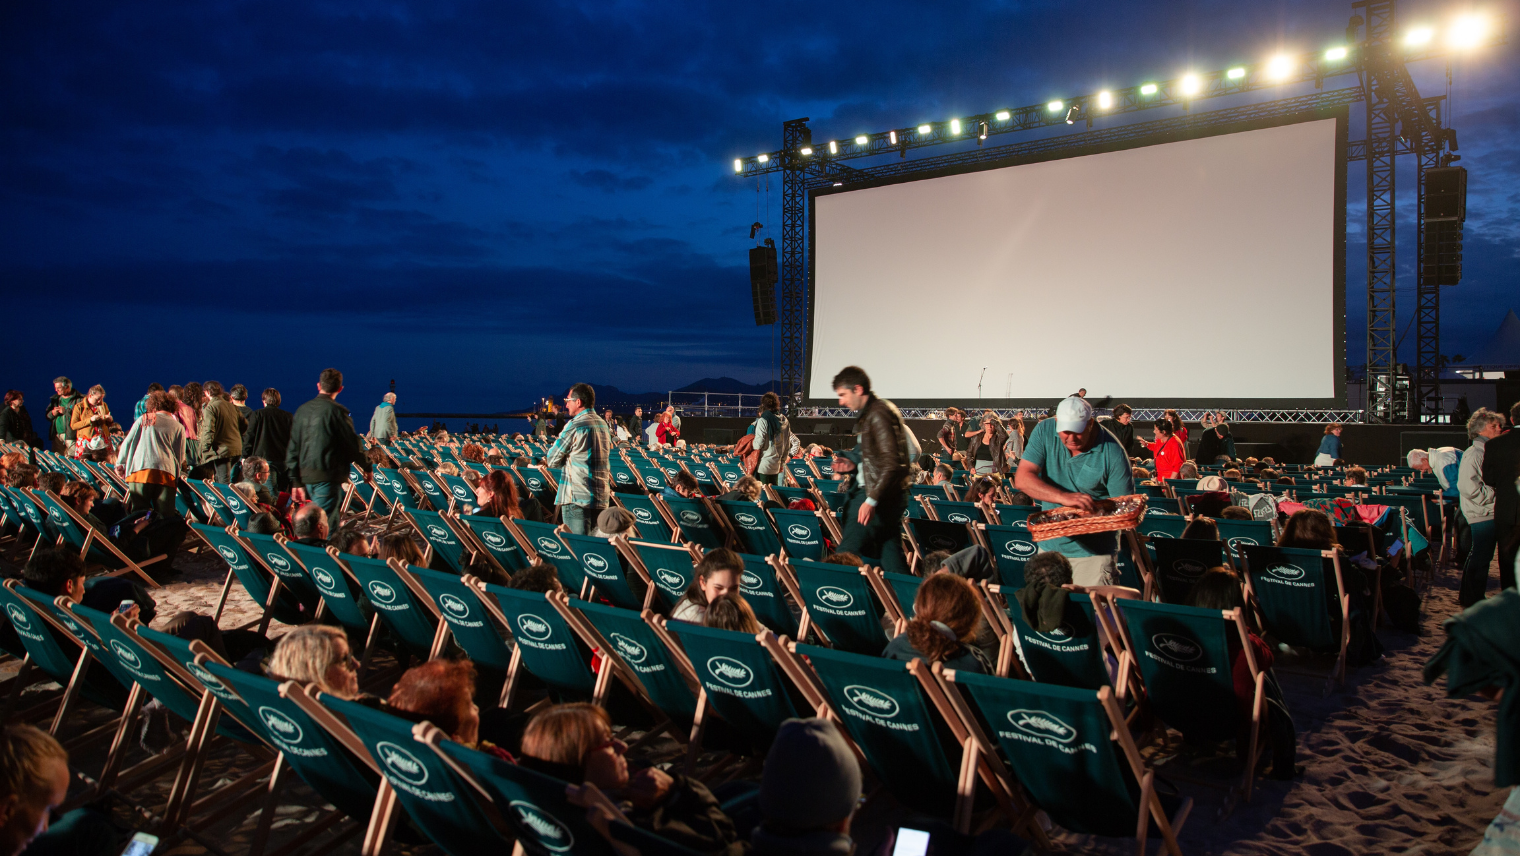 An image of an outdoor cinema